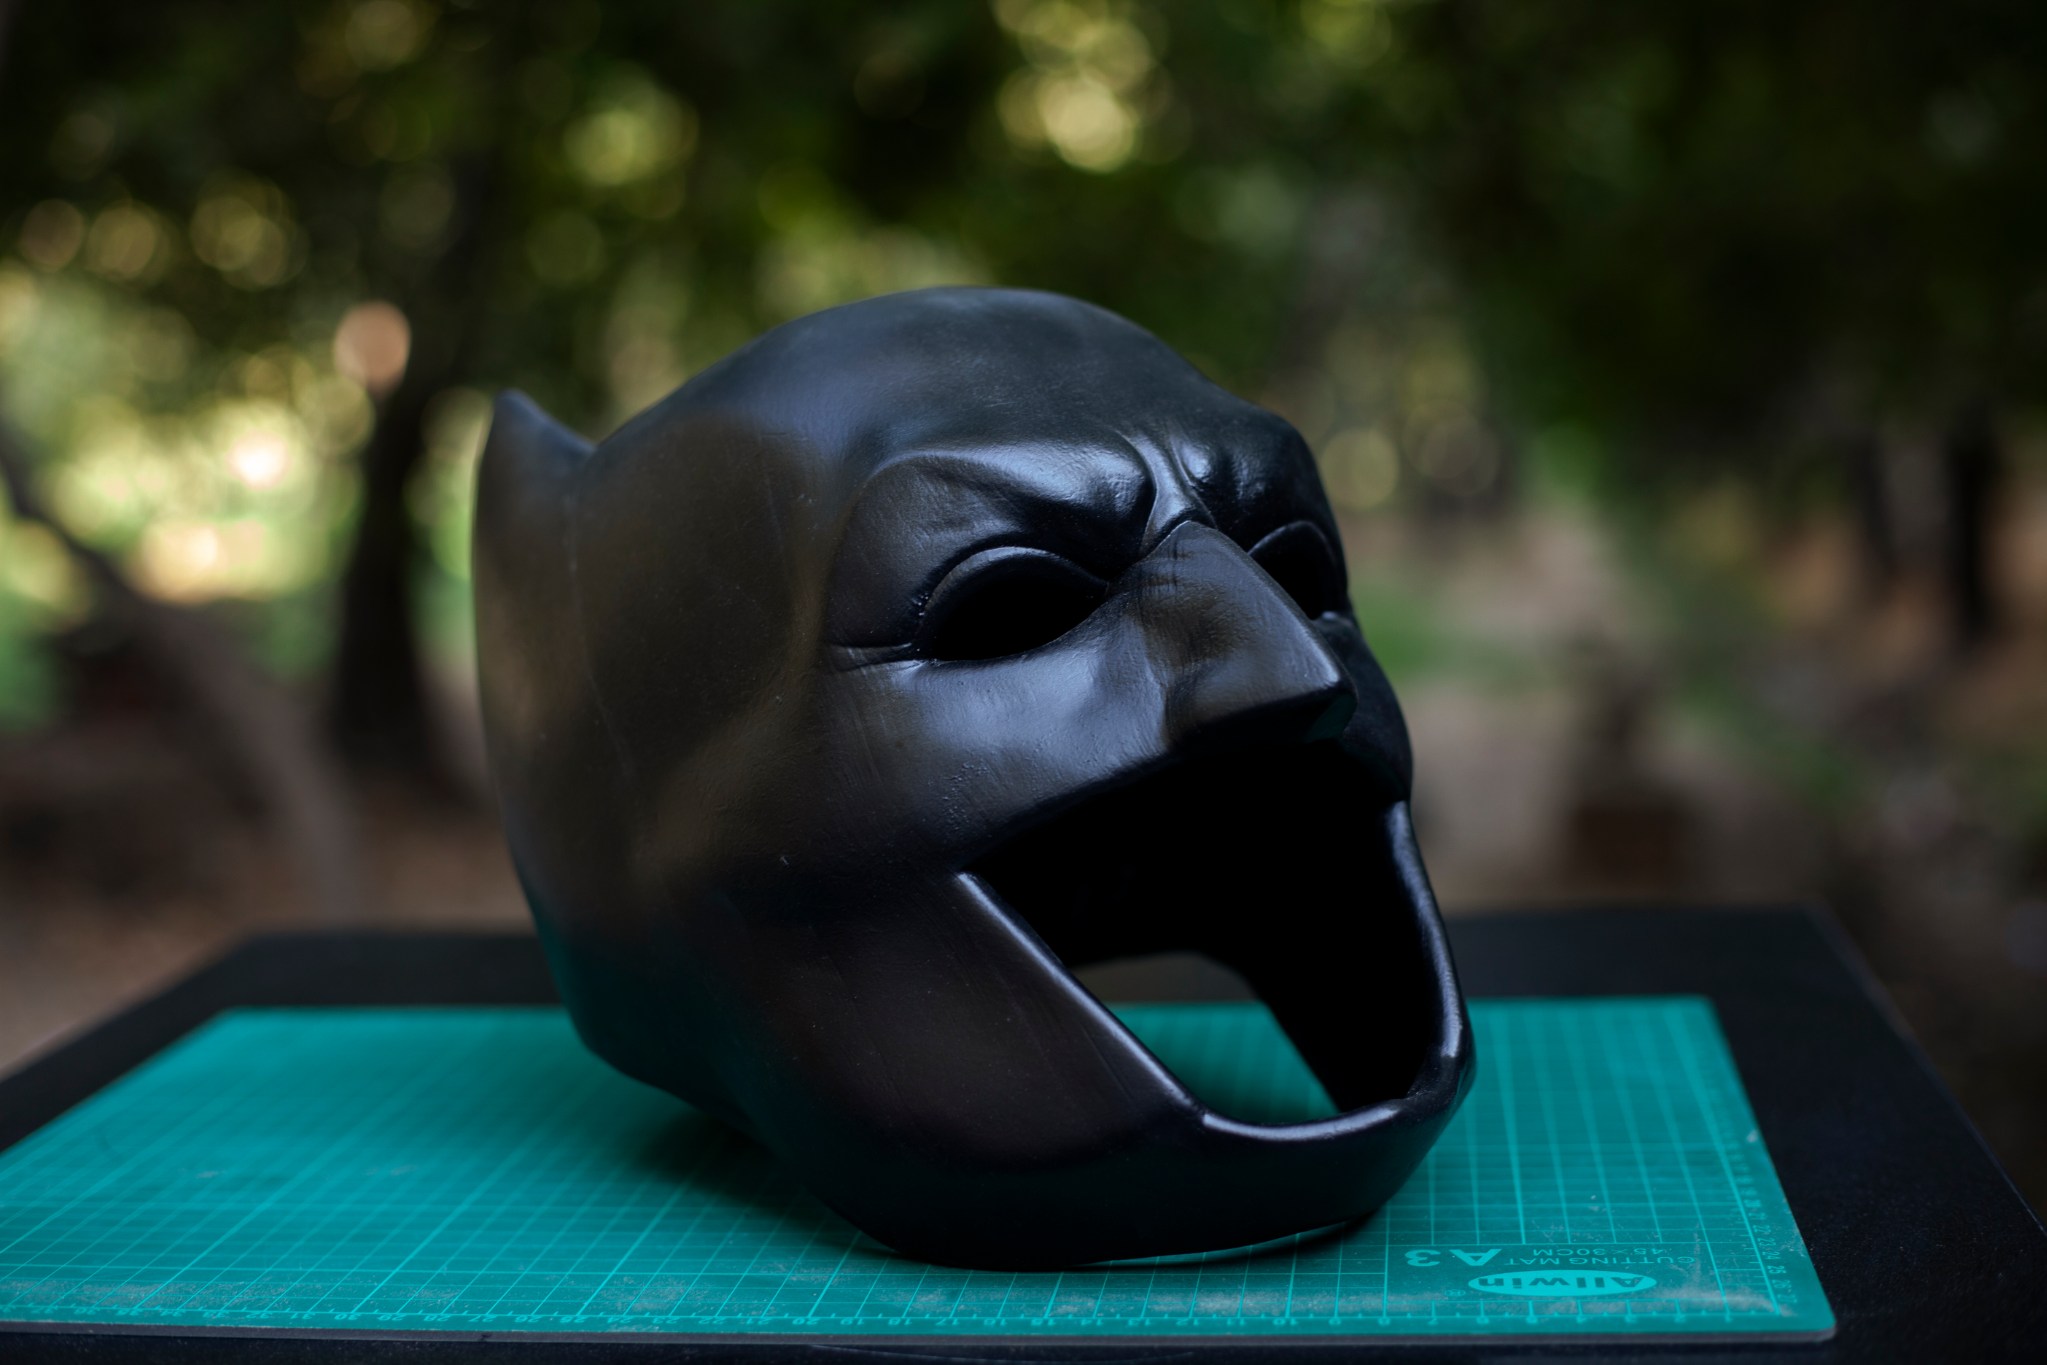 Batman helmet (MEE/Mohammed Hashemi)